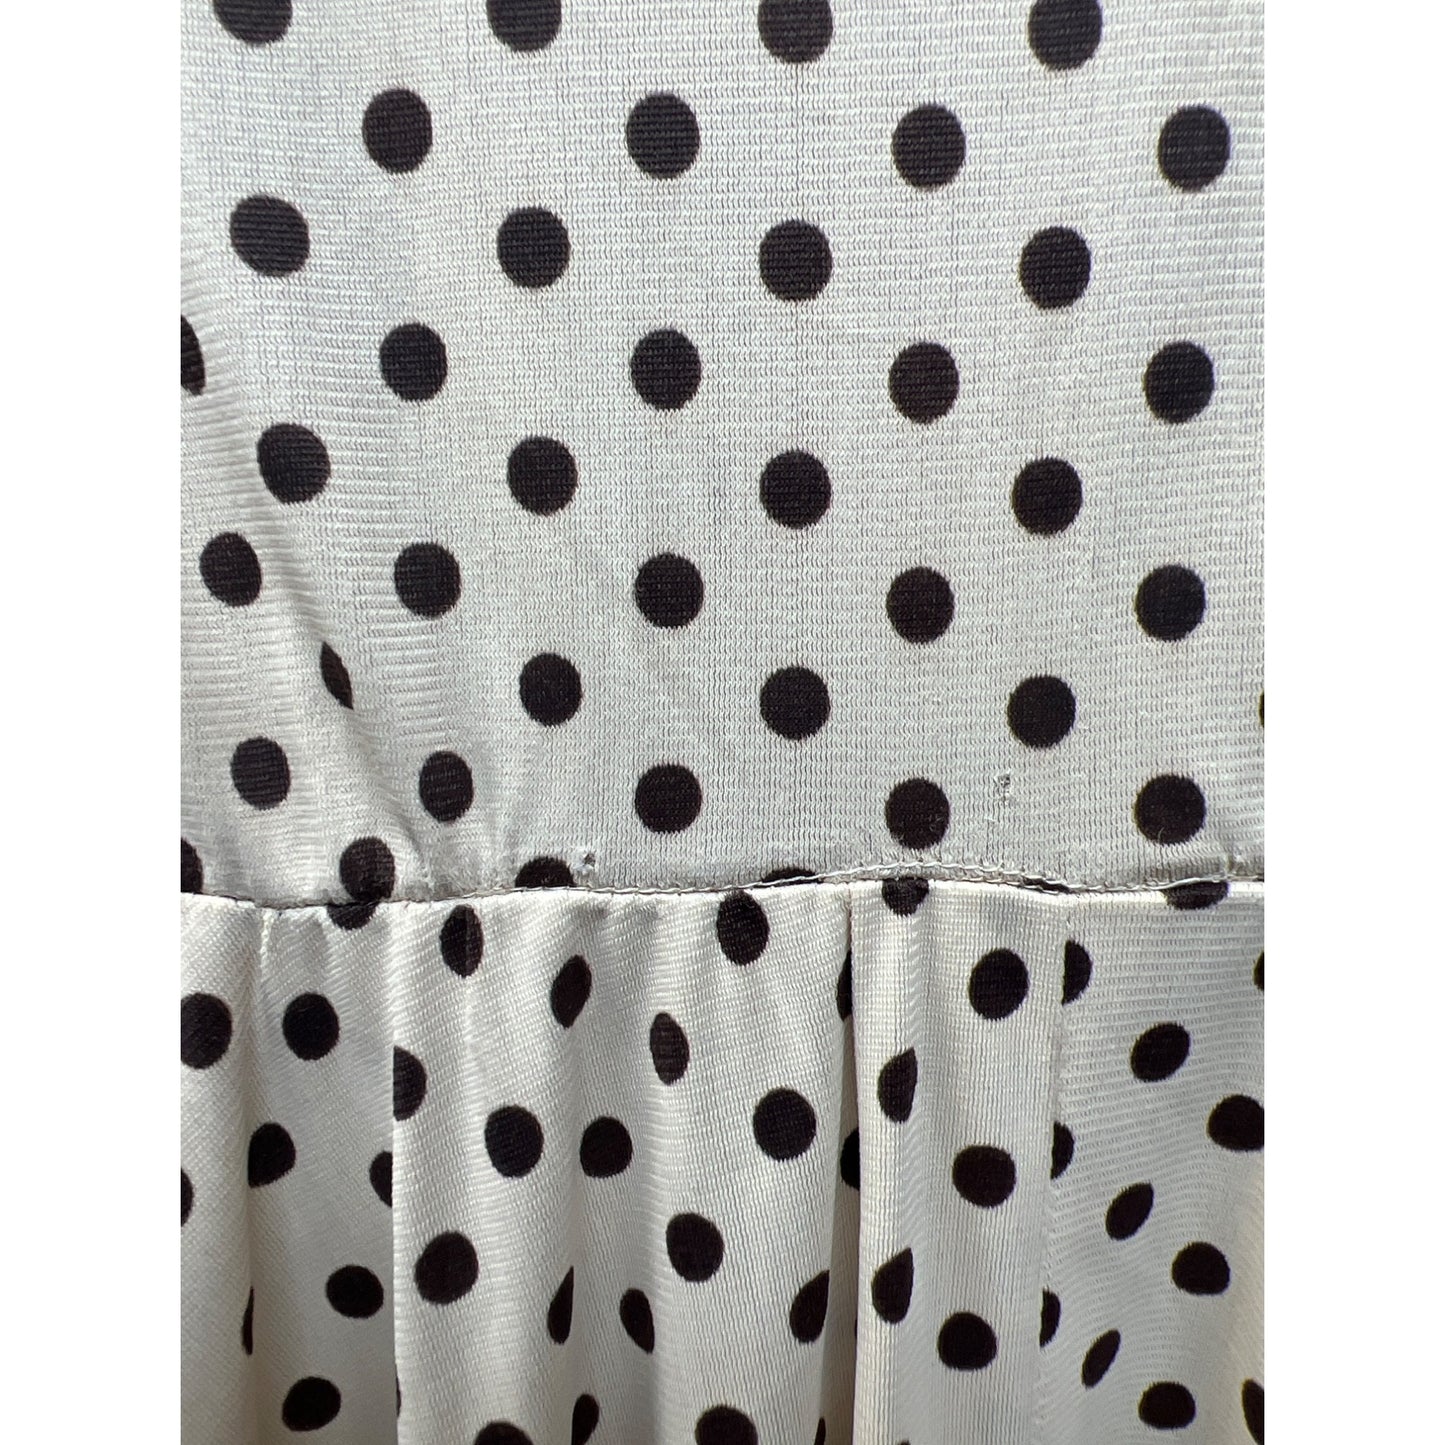 Saks Fifth Avenue Vintage 70's Polka Dot Shirt Dress